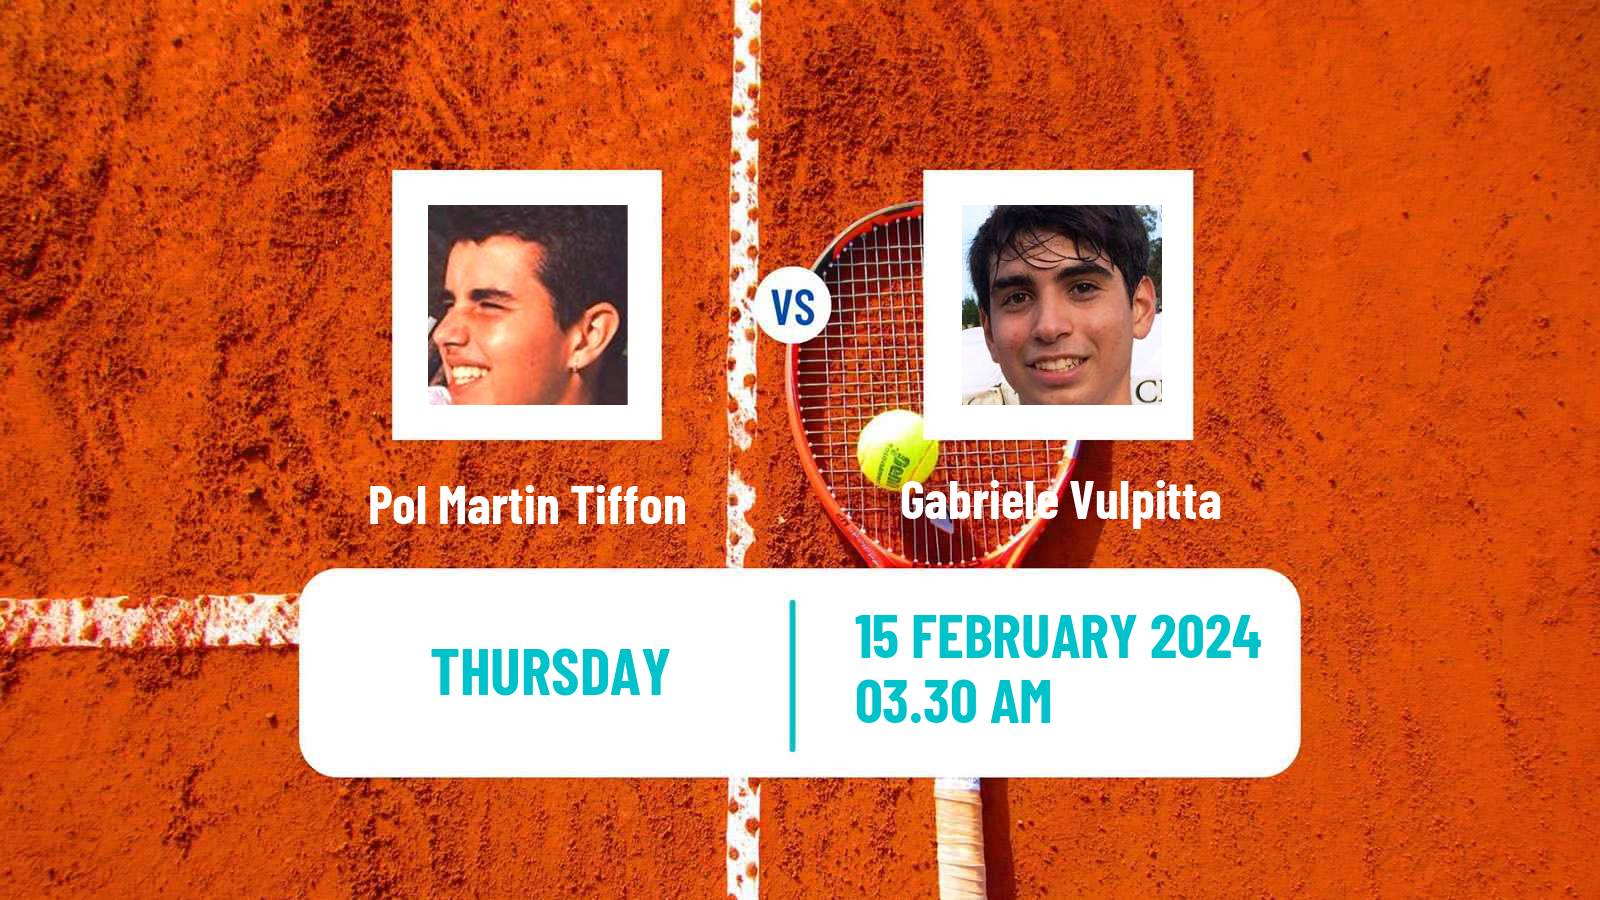 Tennis ITF M25 Hammamet 3 Men Pol Martin Tiffon - Gabriele Vulpitta